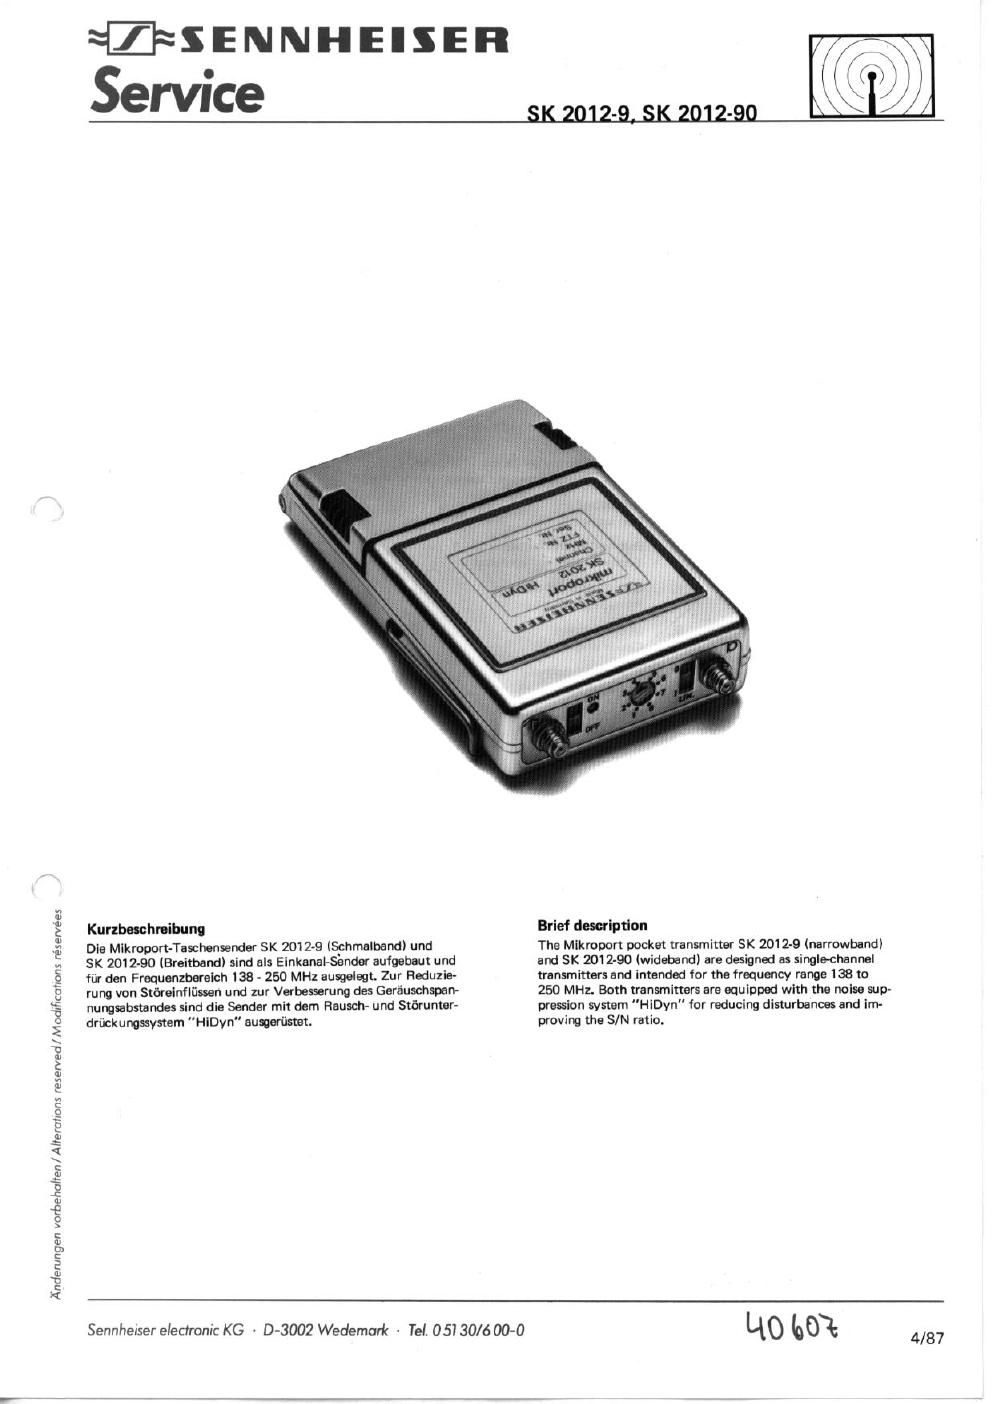 sennheiser sk 2012 wireless tx service manual